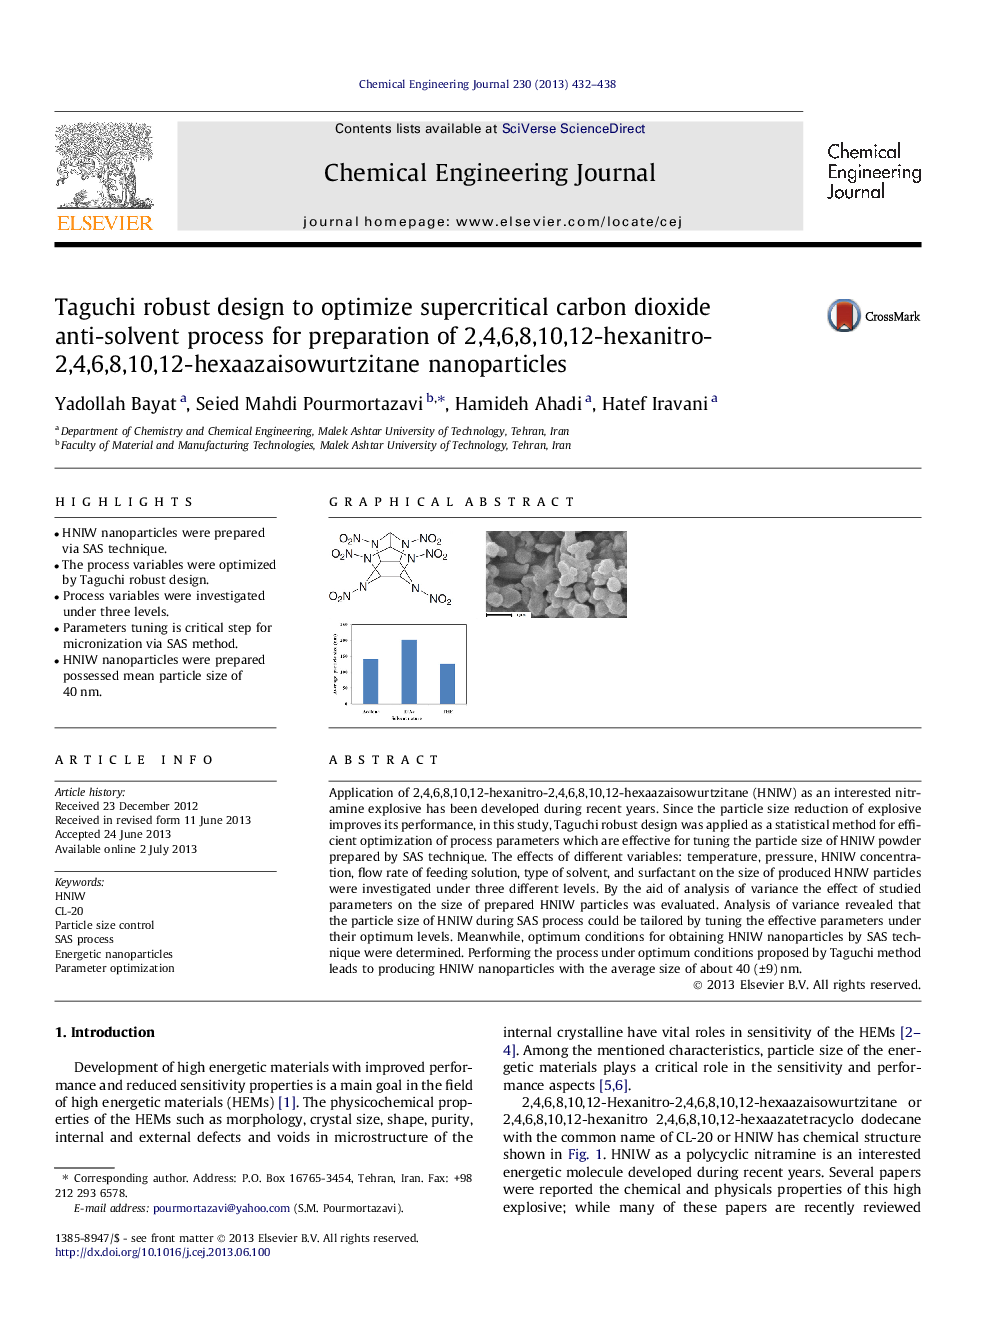 Taguchi robust design to optimize supercritical carbon dioxide anti-solvent process for preparation of 2,4,6,8,10,12-hexanitro-2,4,6,8,10,12-hexaazaisowurtzitane nanoparticles